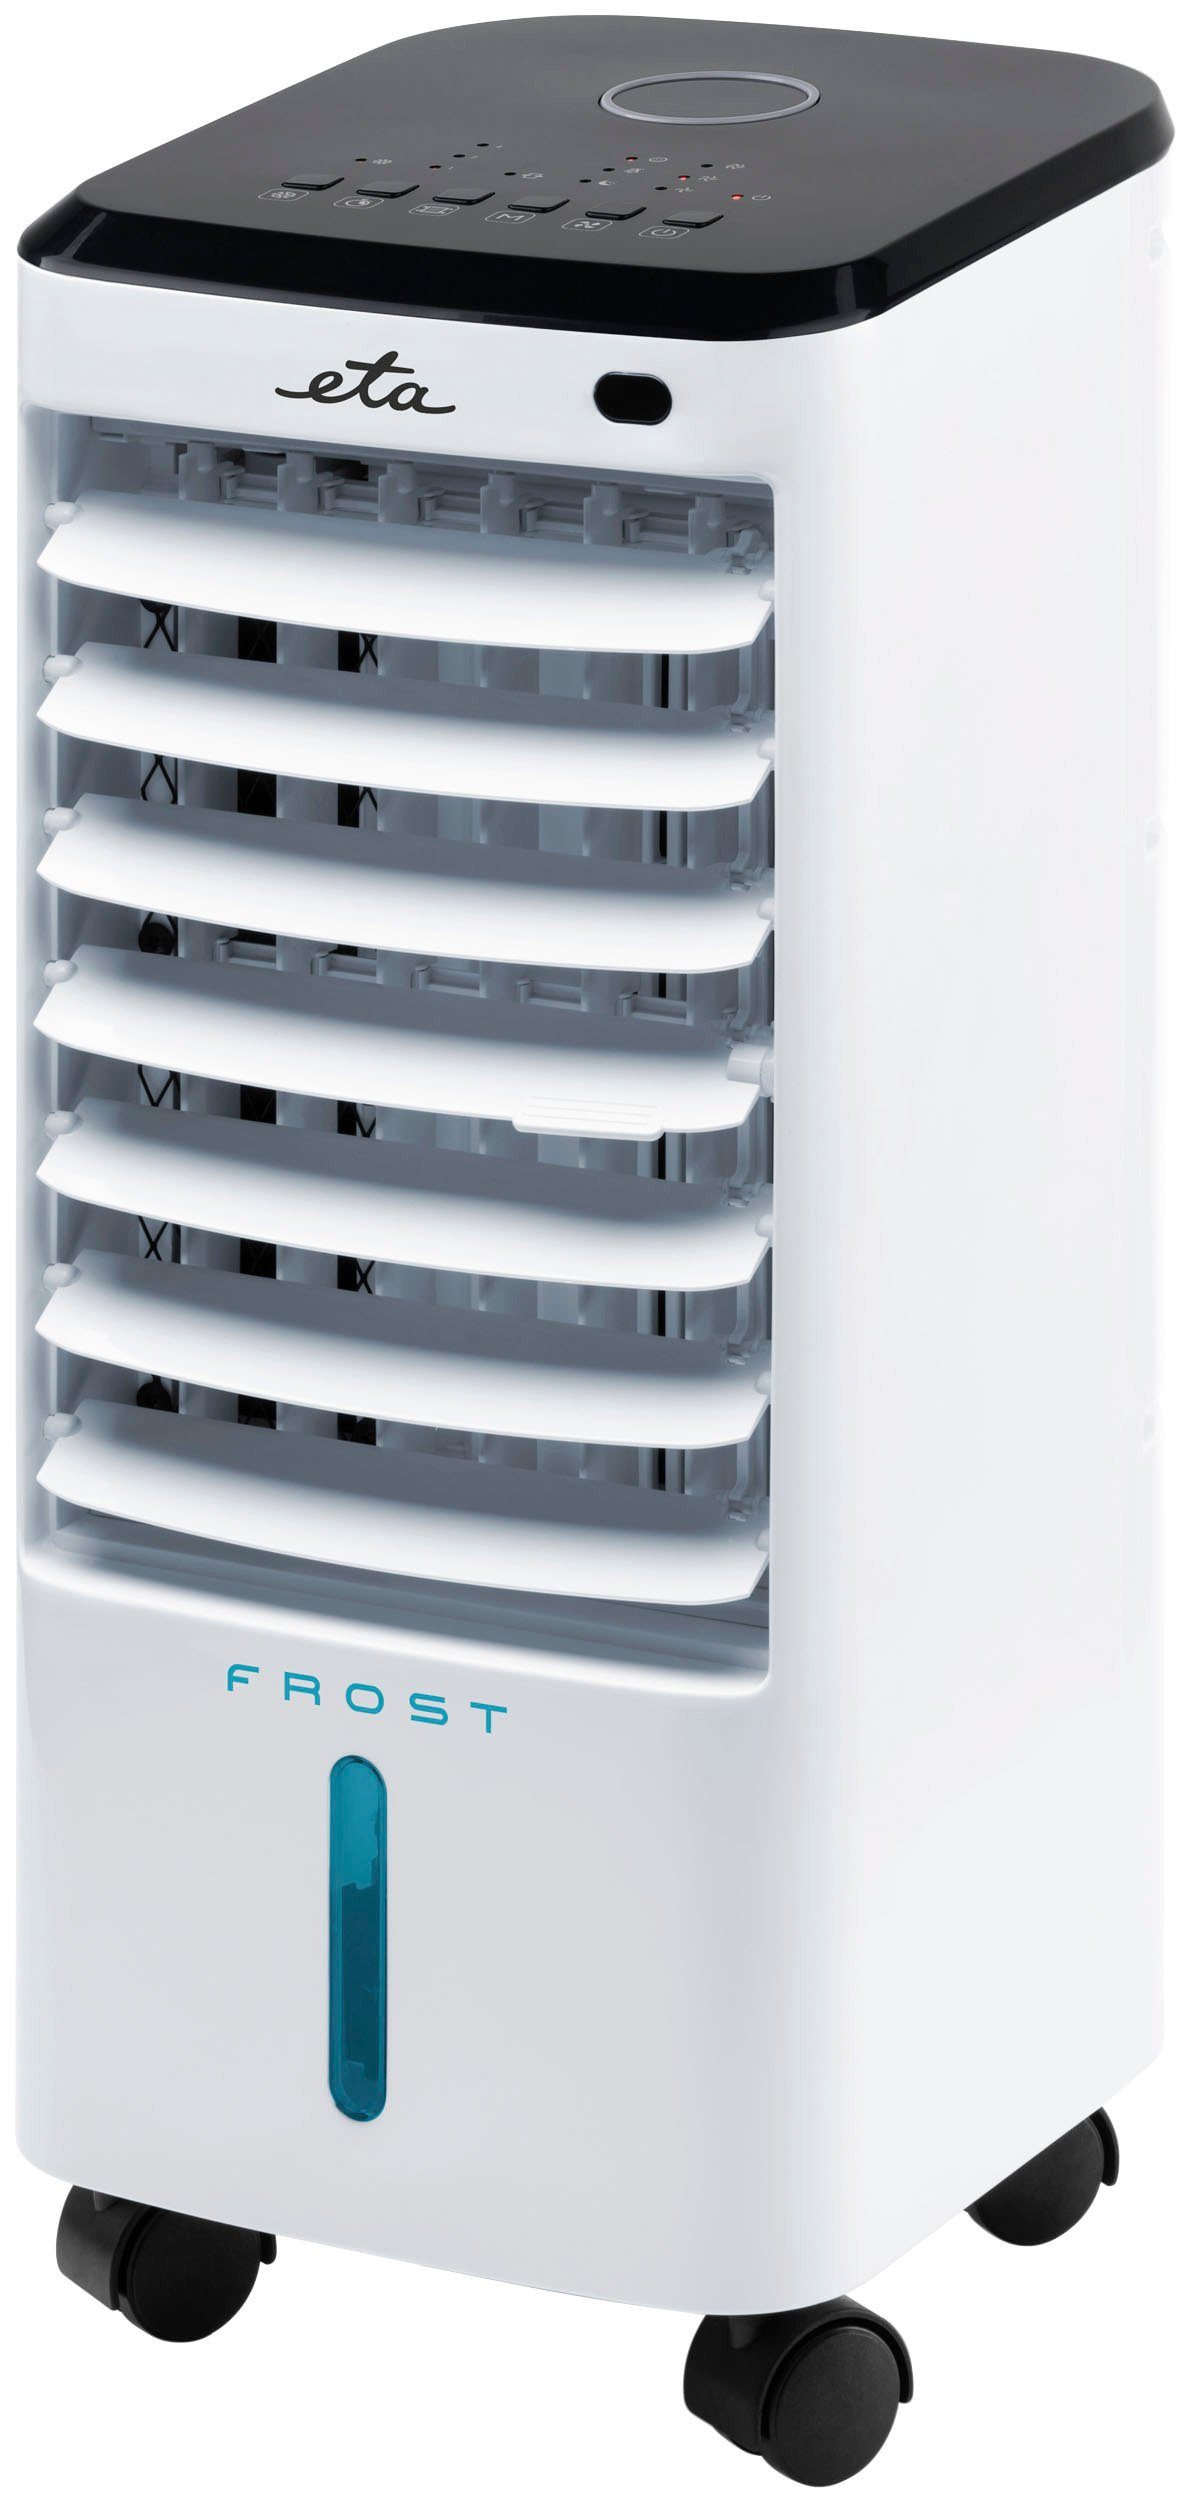 eta Ventilatorkombigerät Befeuchter/Ventilator/Kühler l Luftkühler, "Frost", 3,5 3-in-1 Fassungsvermögen